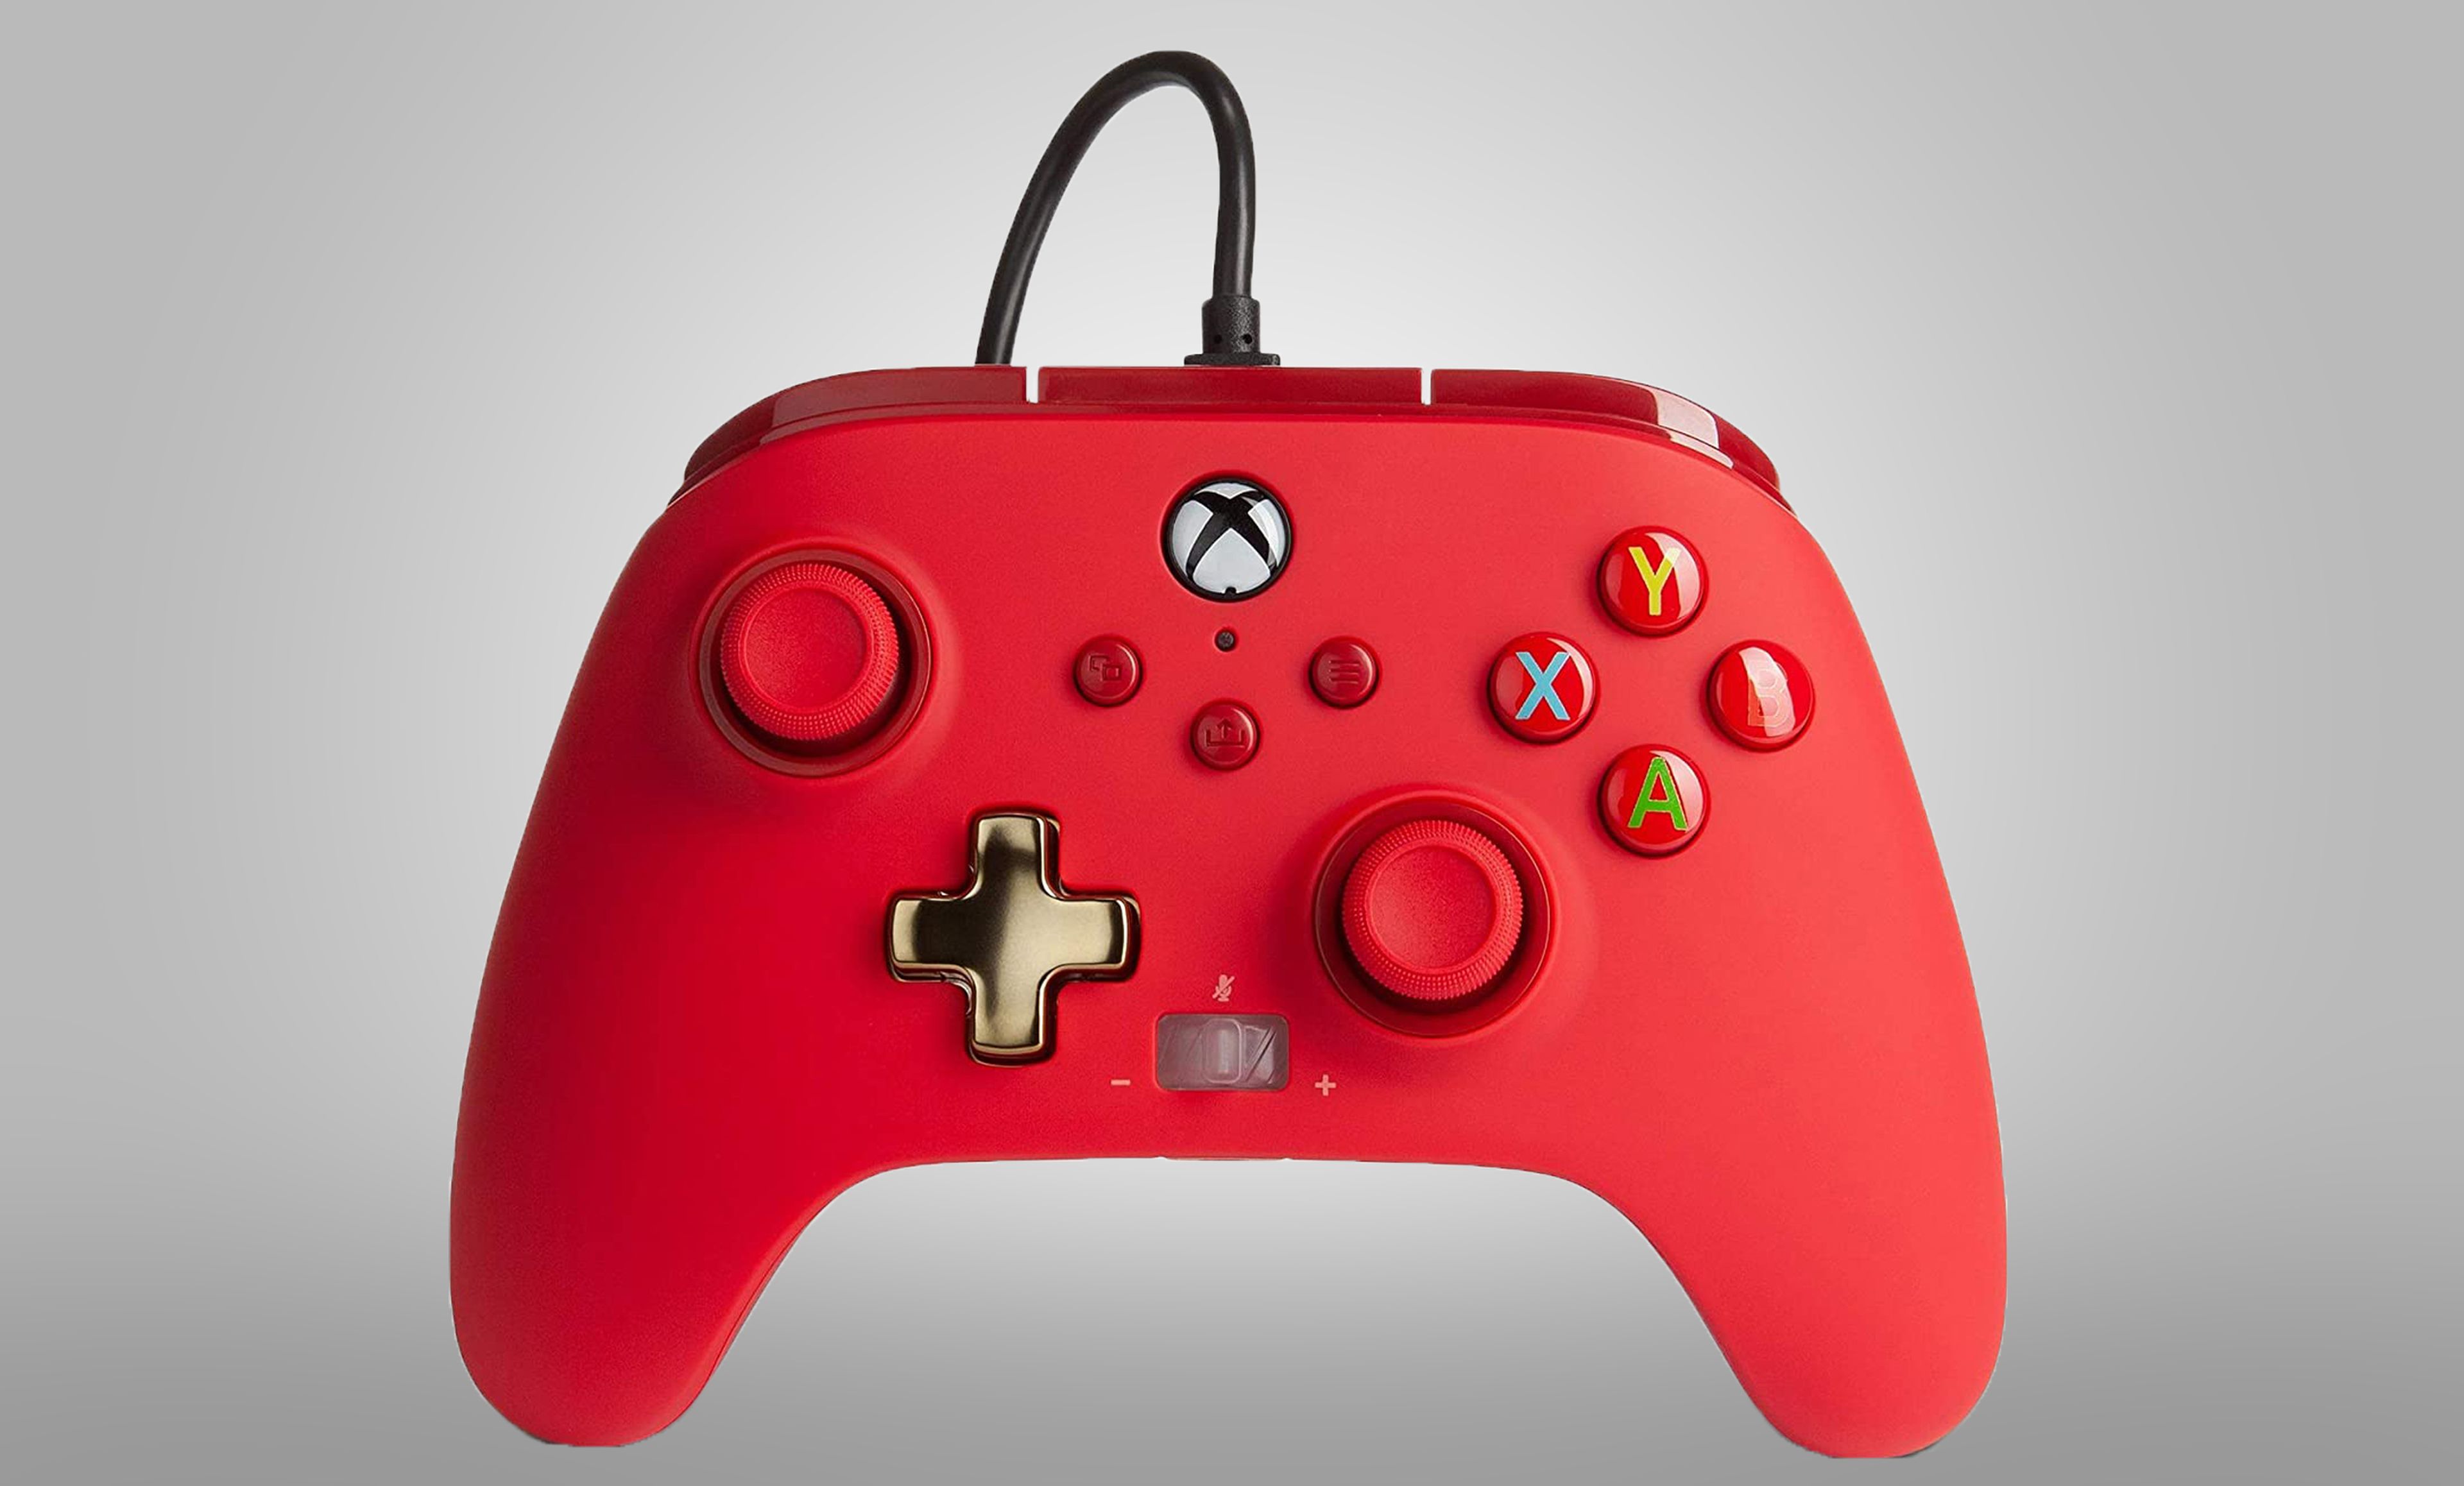 Soporte para Mando de juegos Xbox One, accesorios para Mando de